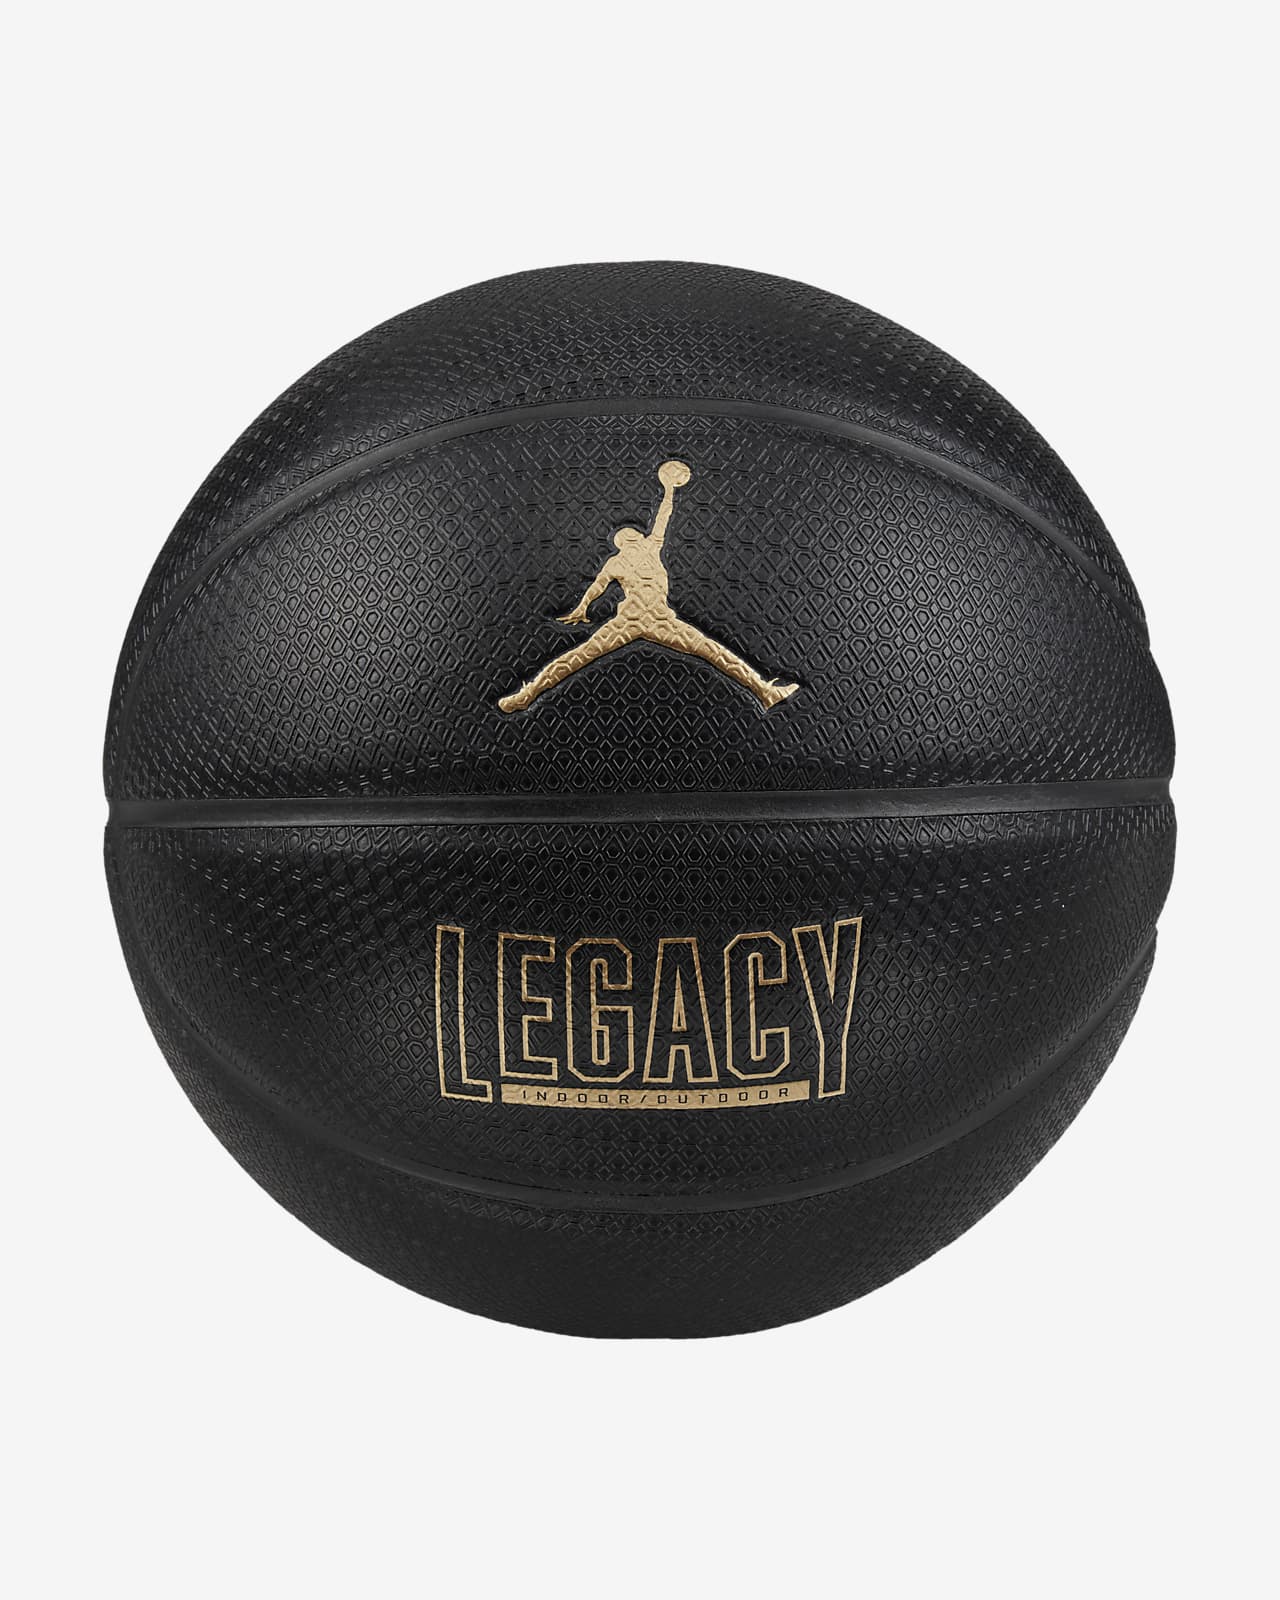 Europa reflujo A menudo hablado Jordan Legacy 8P Basketball. Nike.com